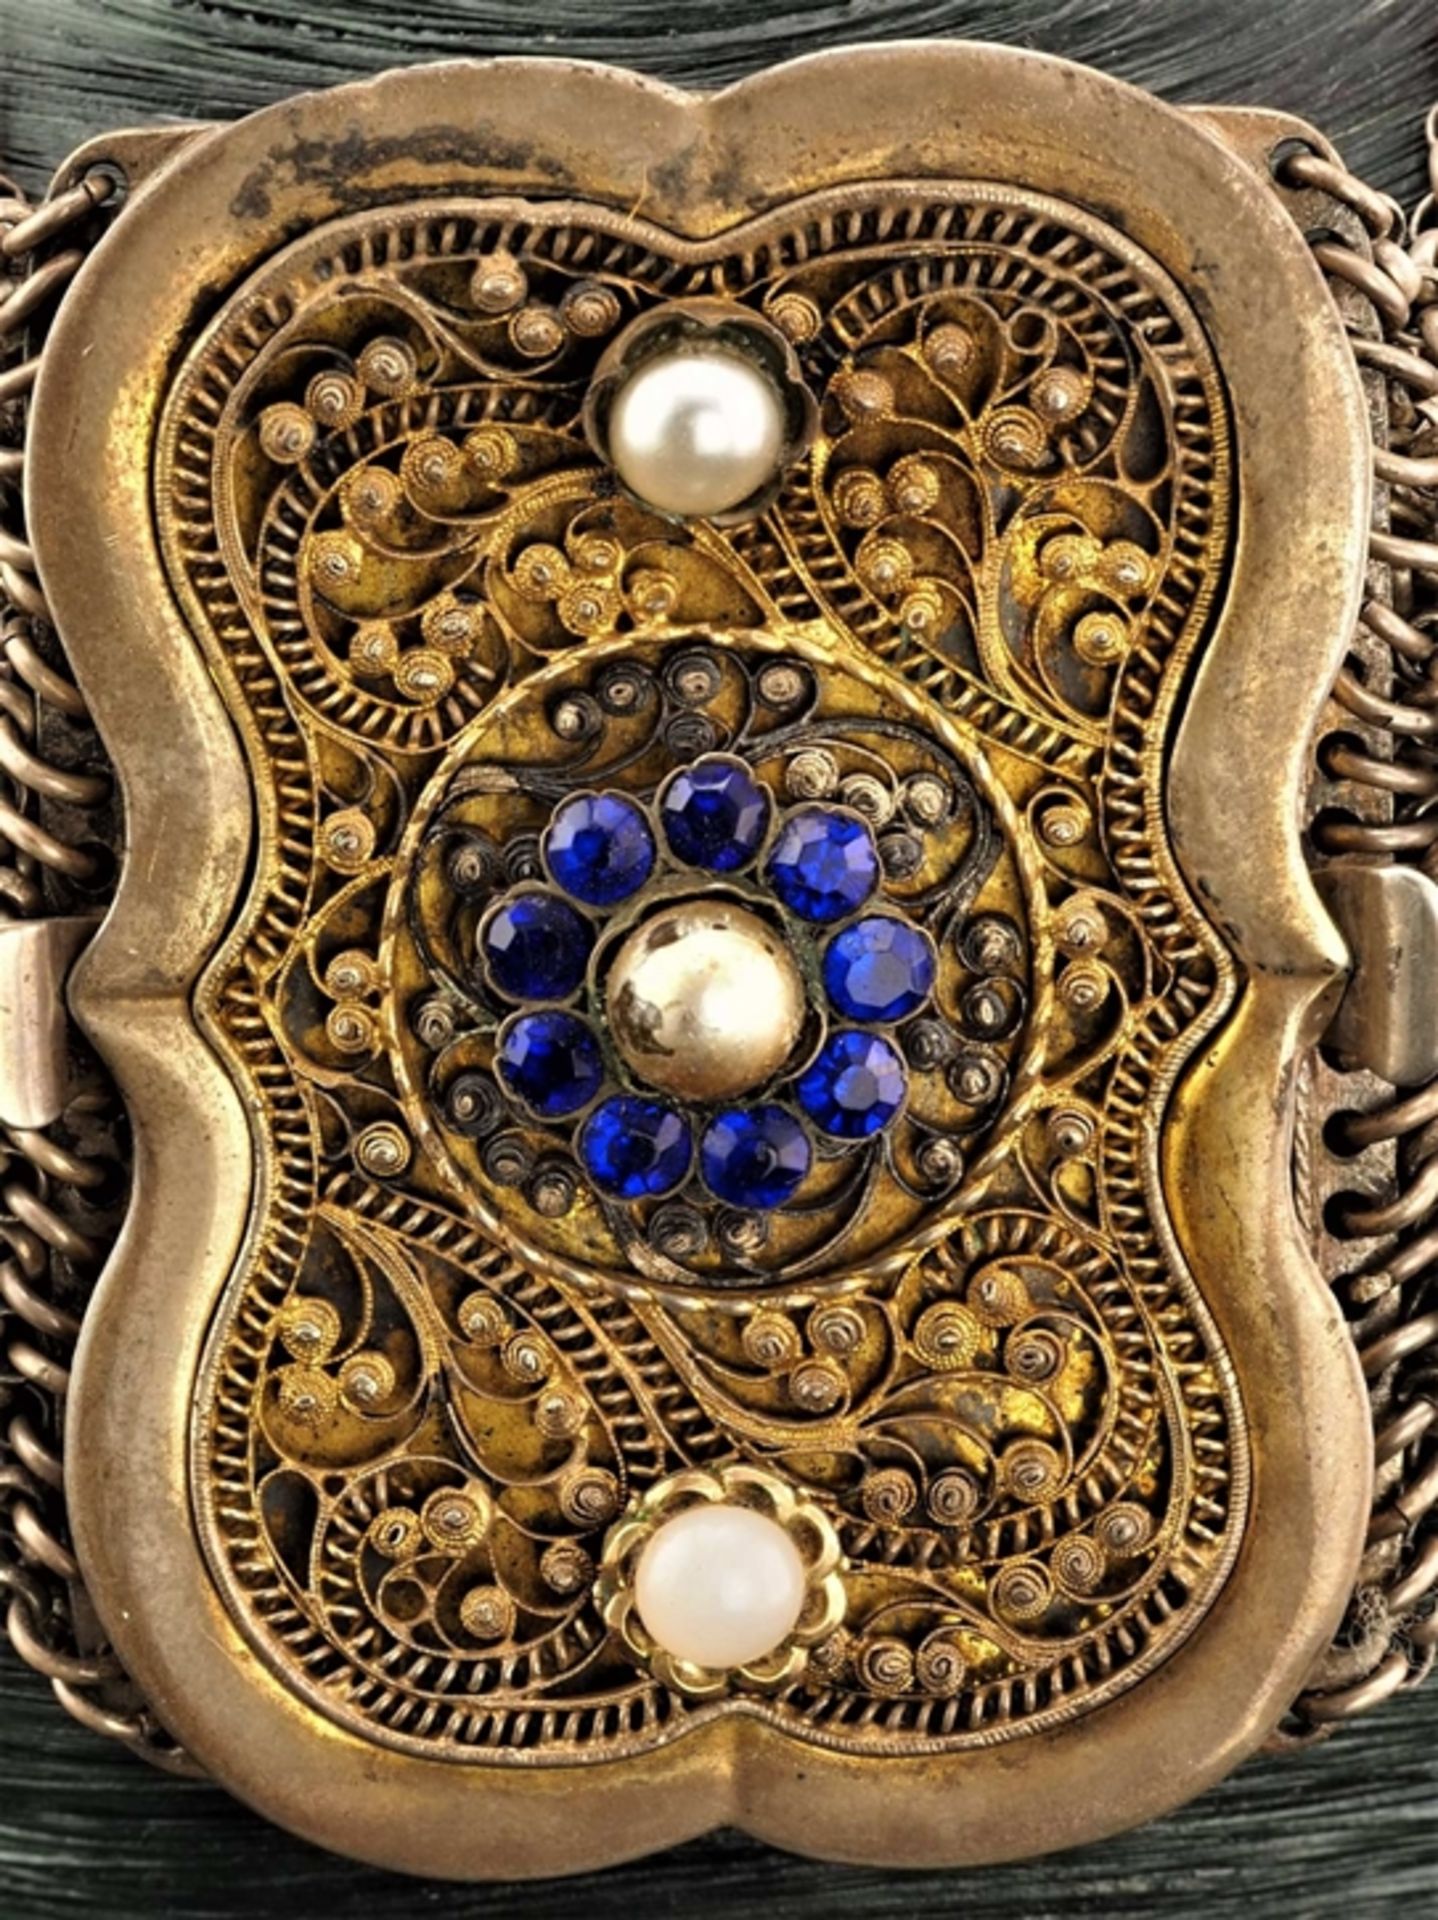 Biedermeier choker necklace around 1850, probably imperial Austria - Image 2 of 7